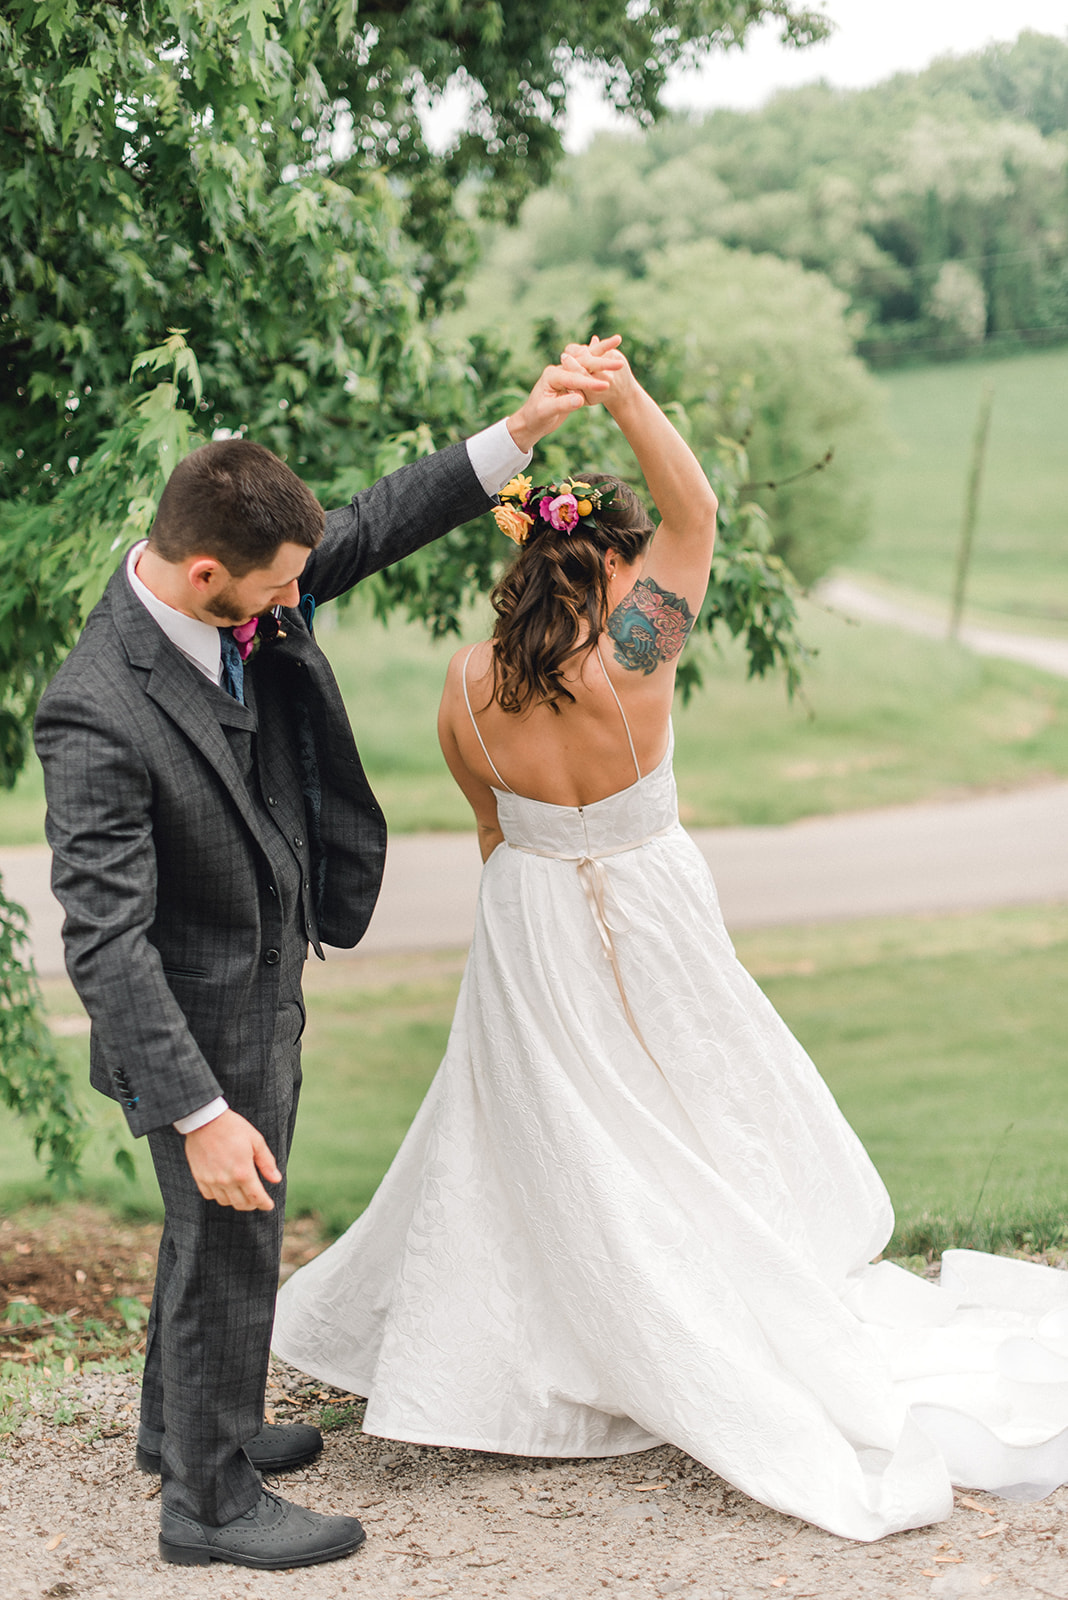 A Colorful Pittsburg Bramblewood Barn Wedding - The Overwhelmed Bride Wedding Blog